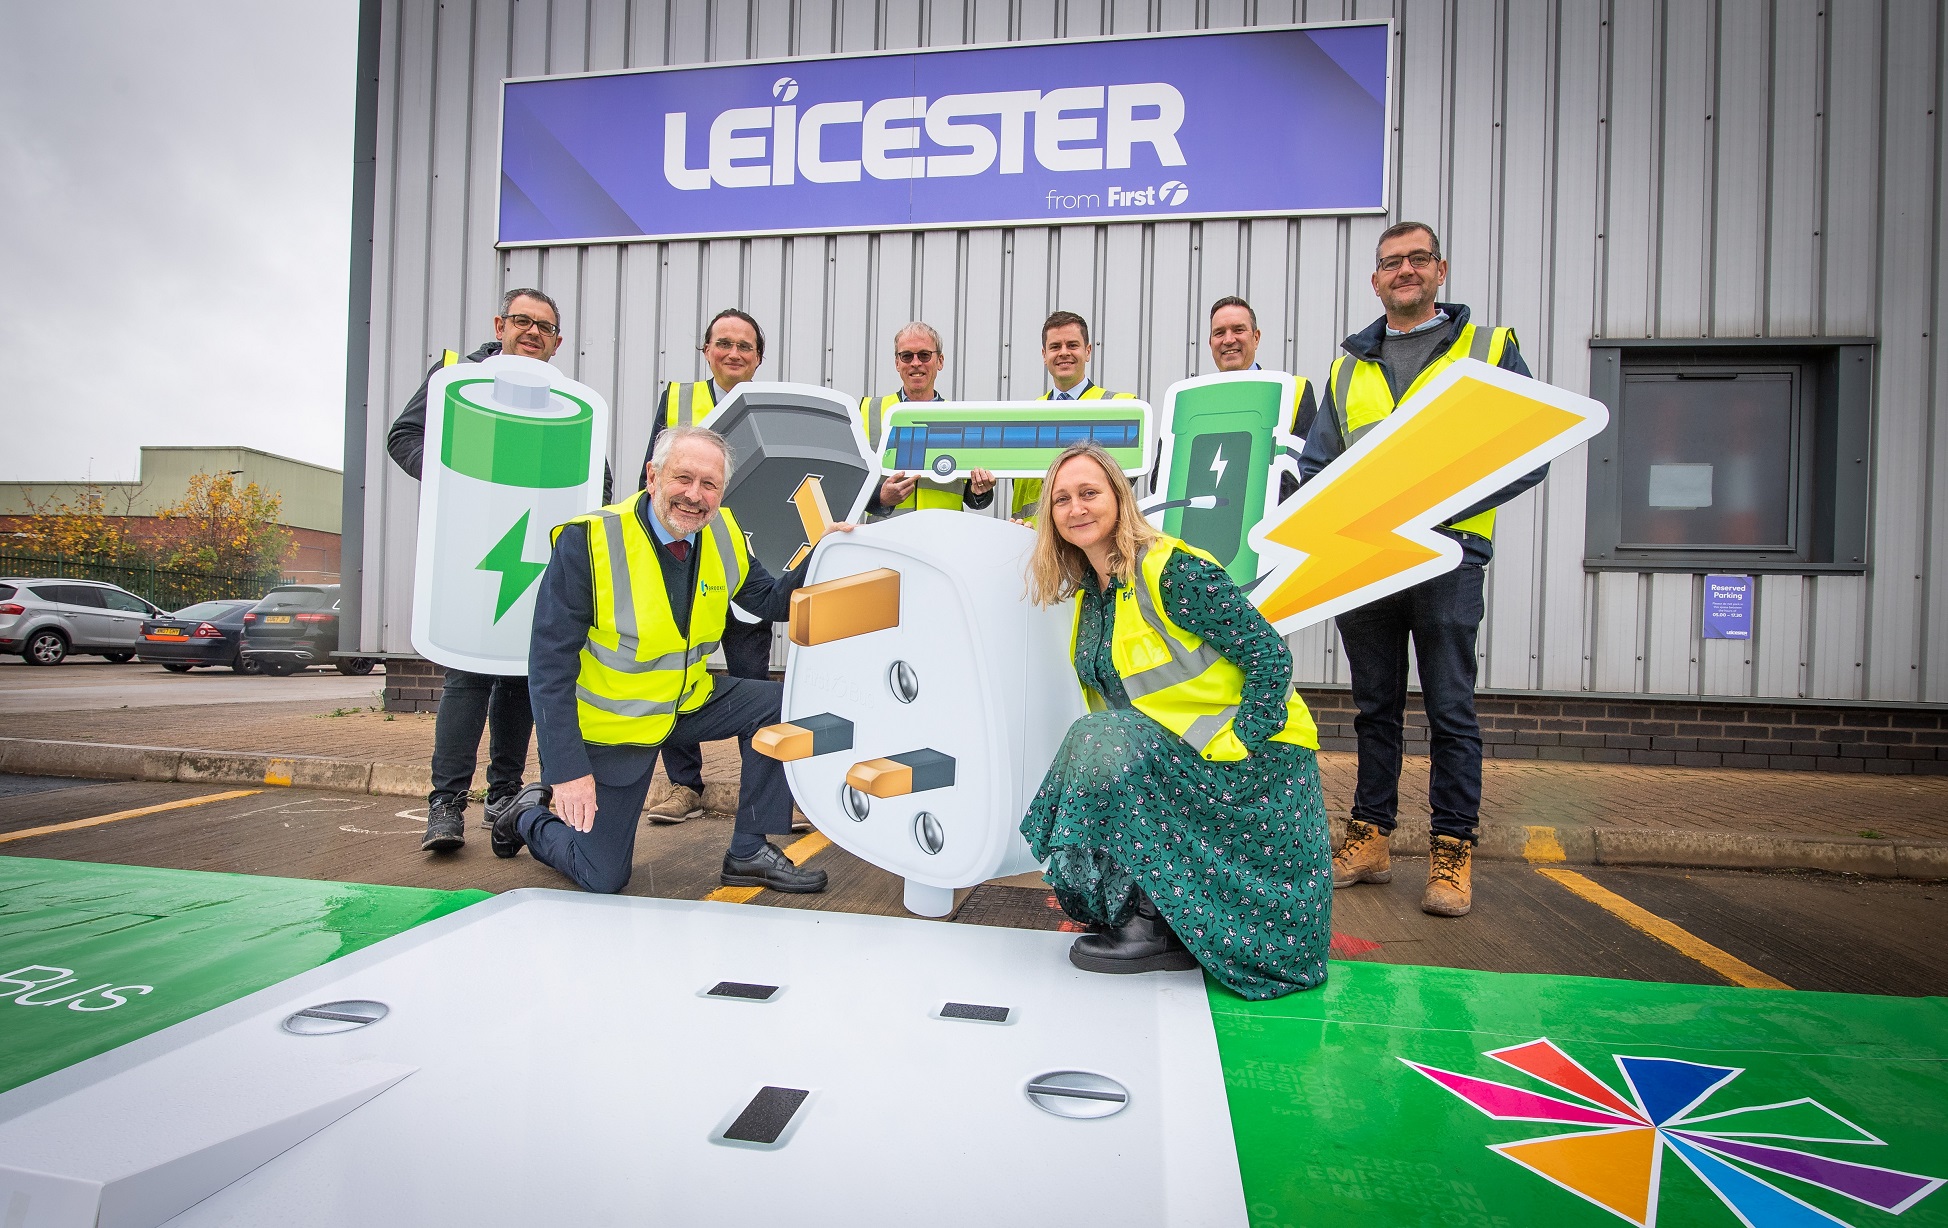 Zero-emission bus work in Leicester